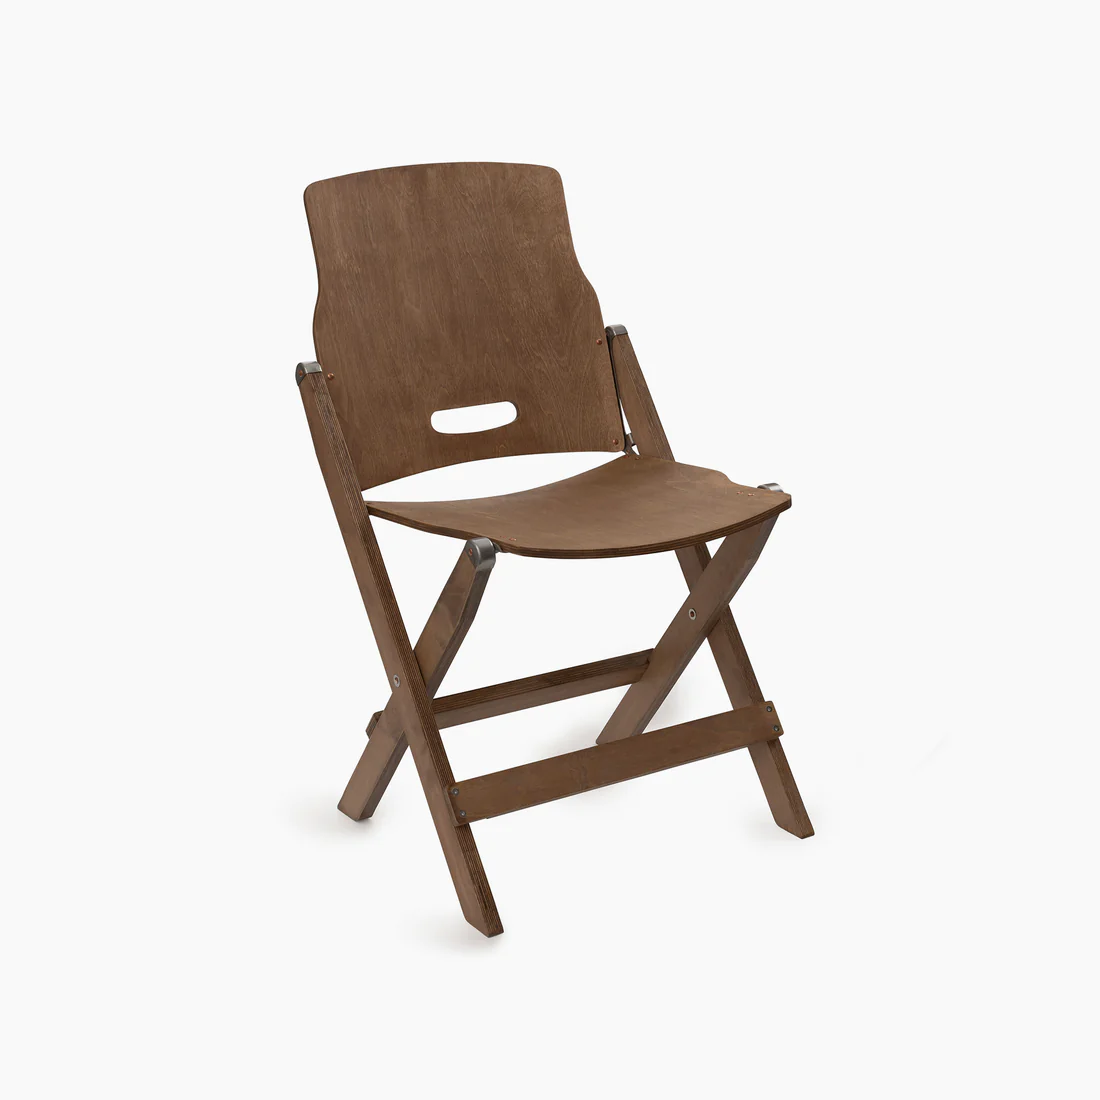 Ridge Top Wood Folding Chair